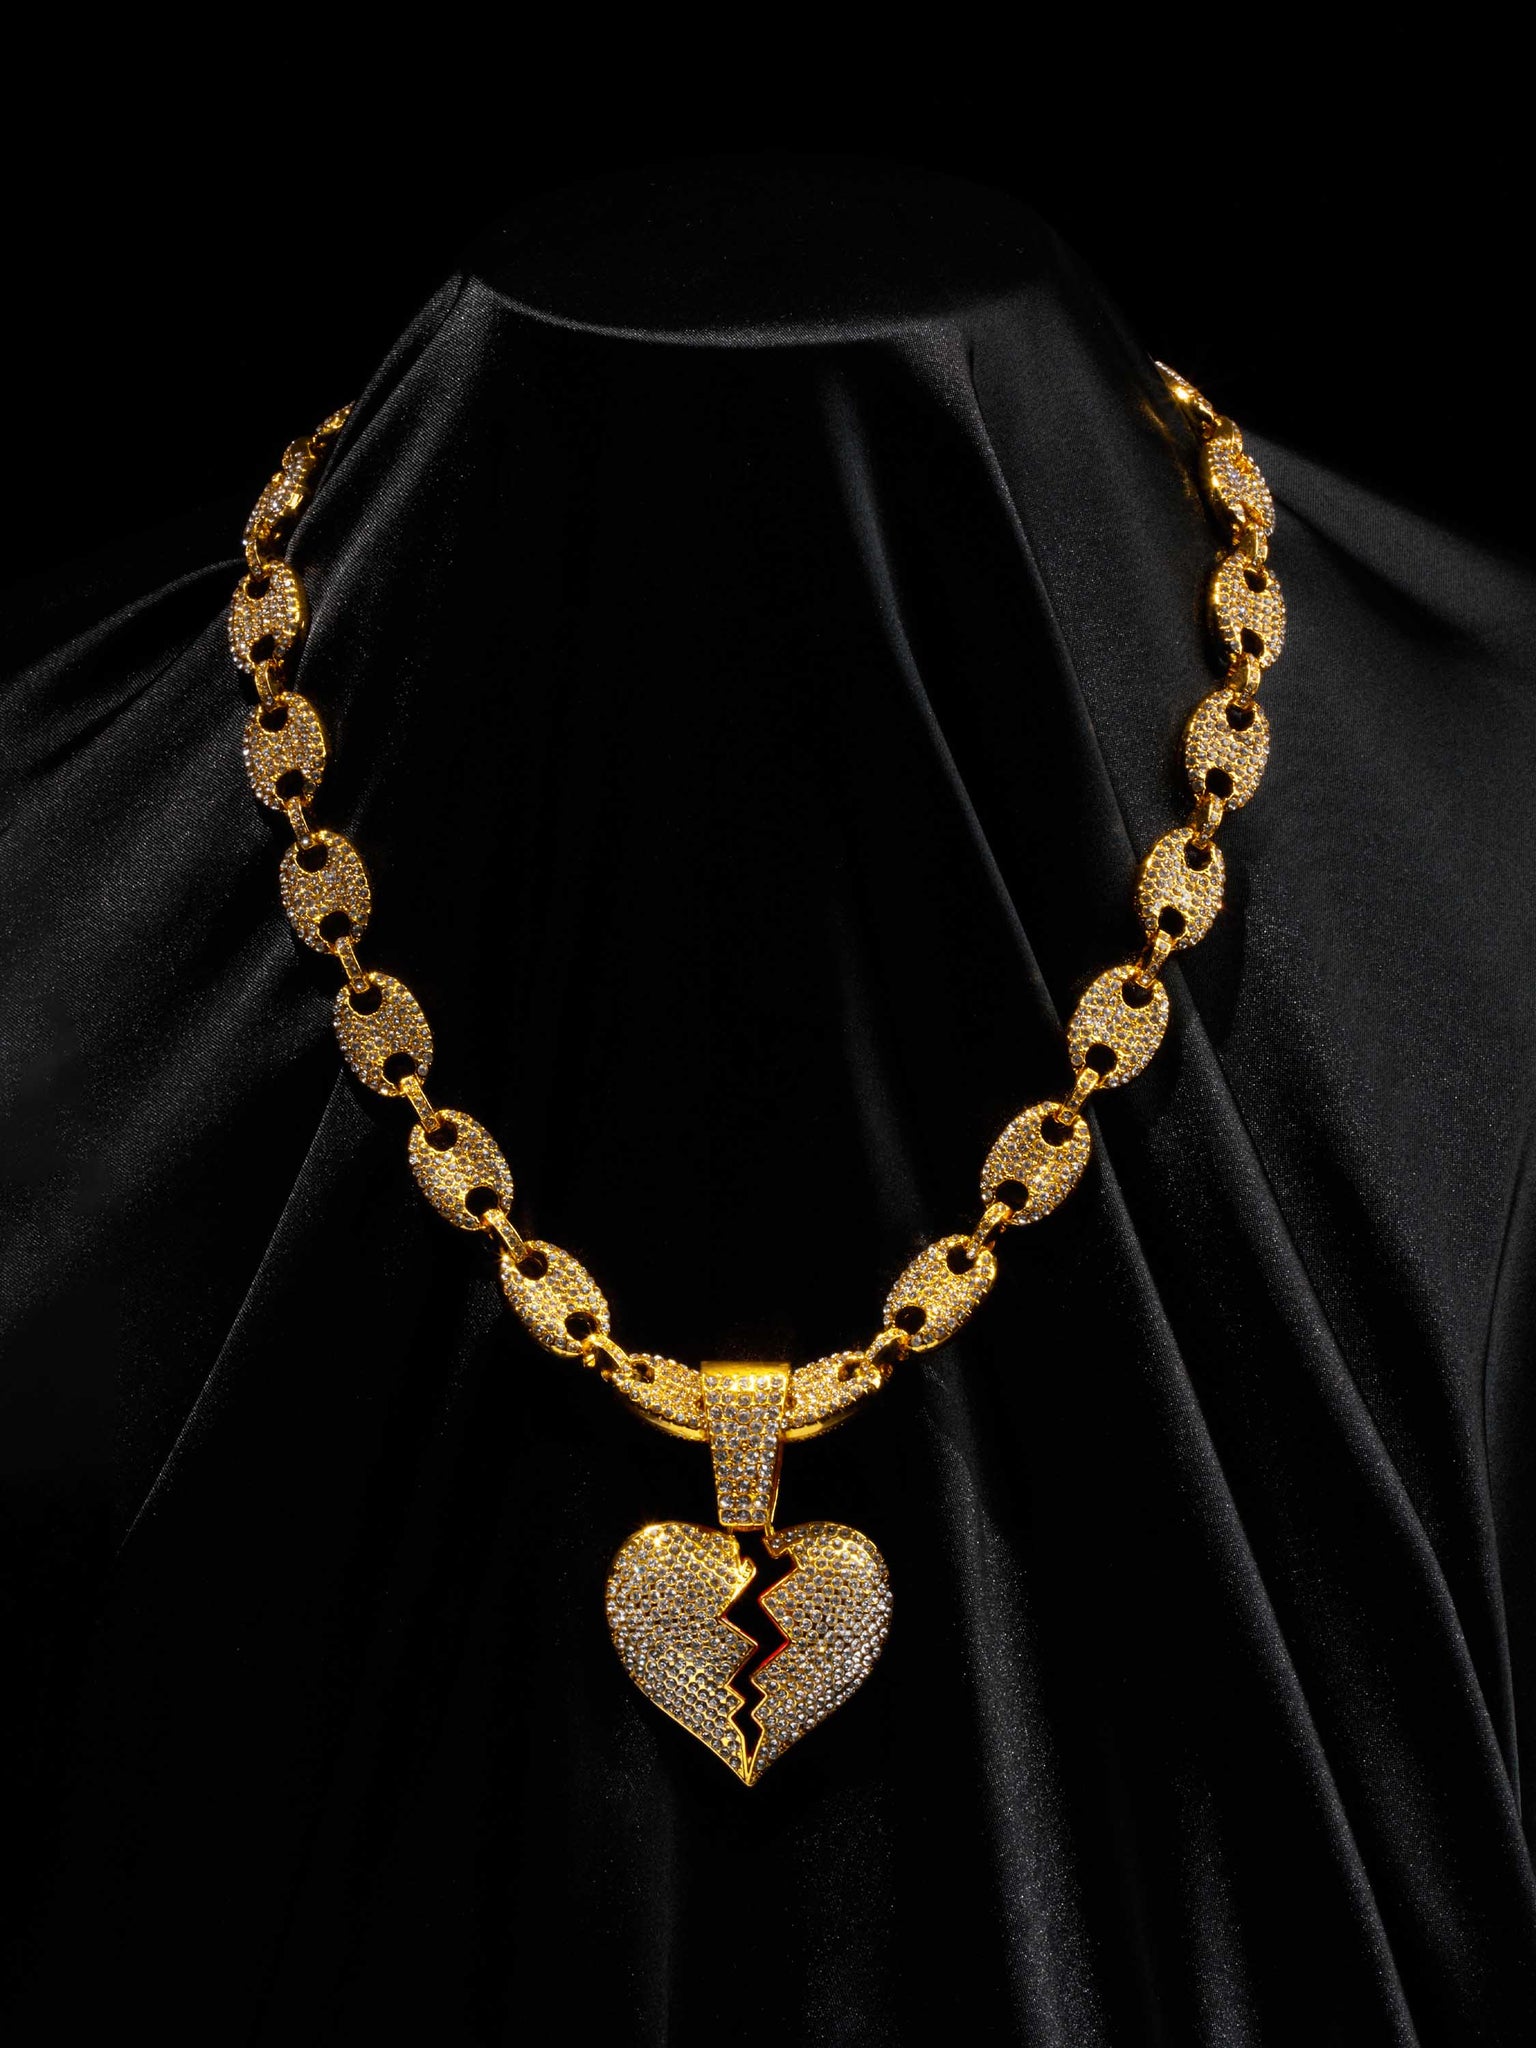 The Supermade Heartbreak Hip-hop Cuba Chain Necklace-1513